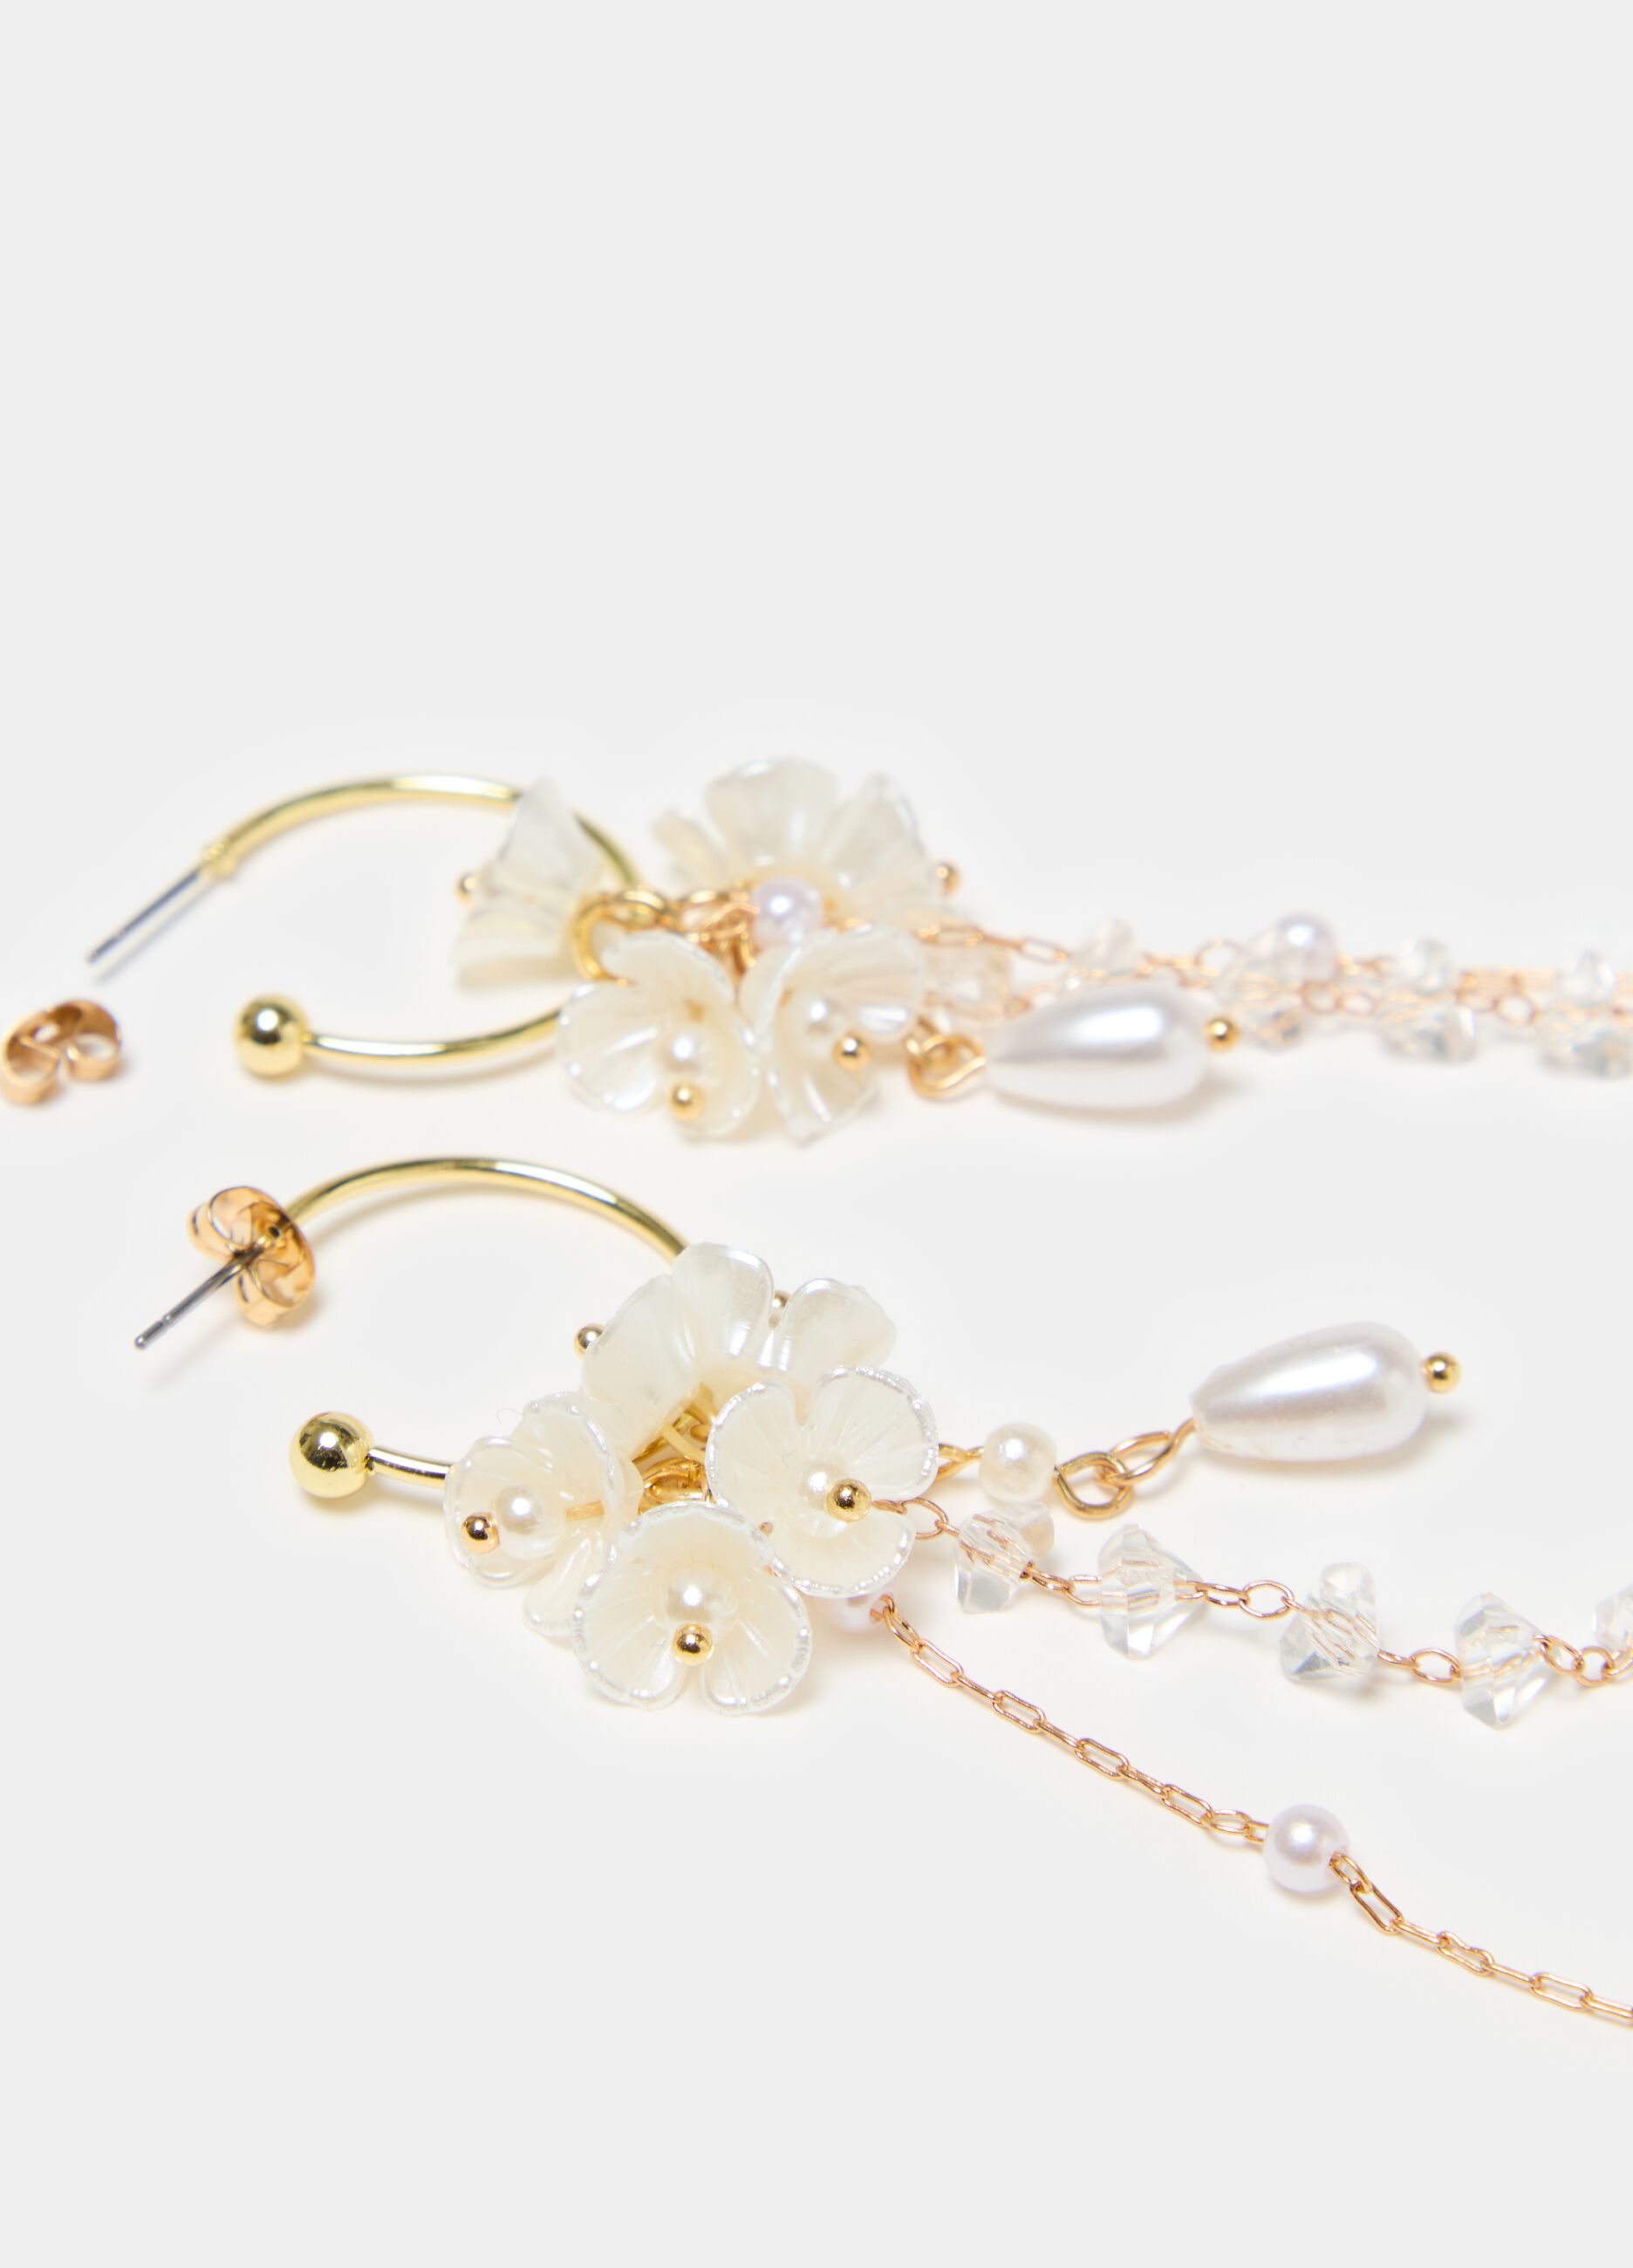 Waterfall earrings with pearls